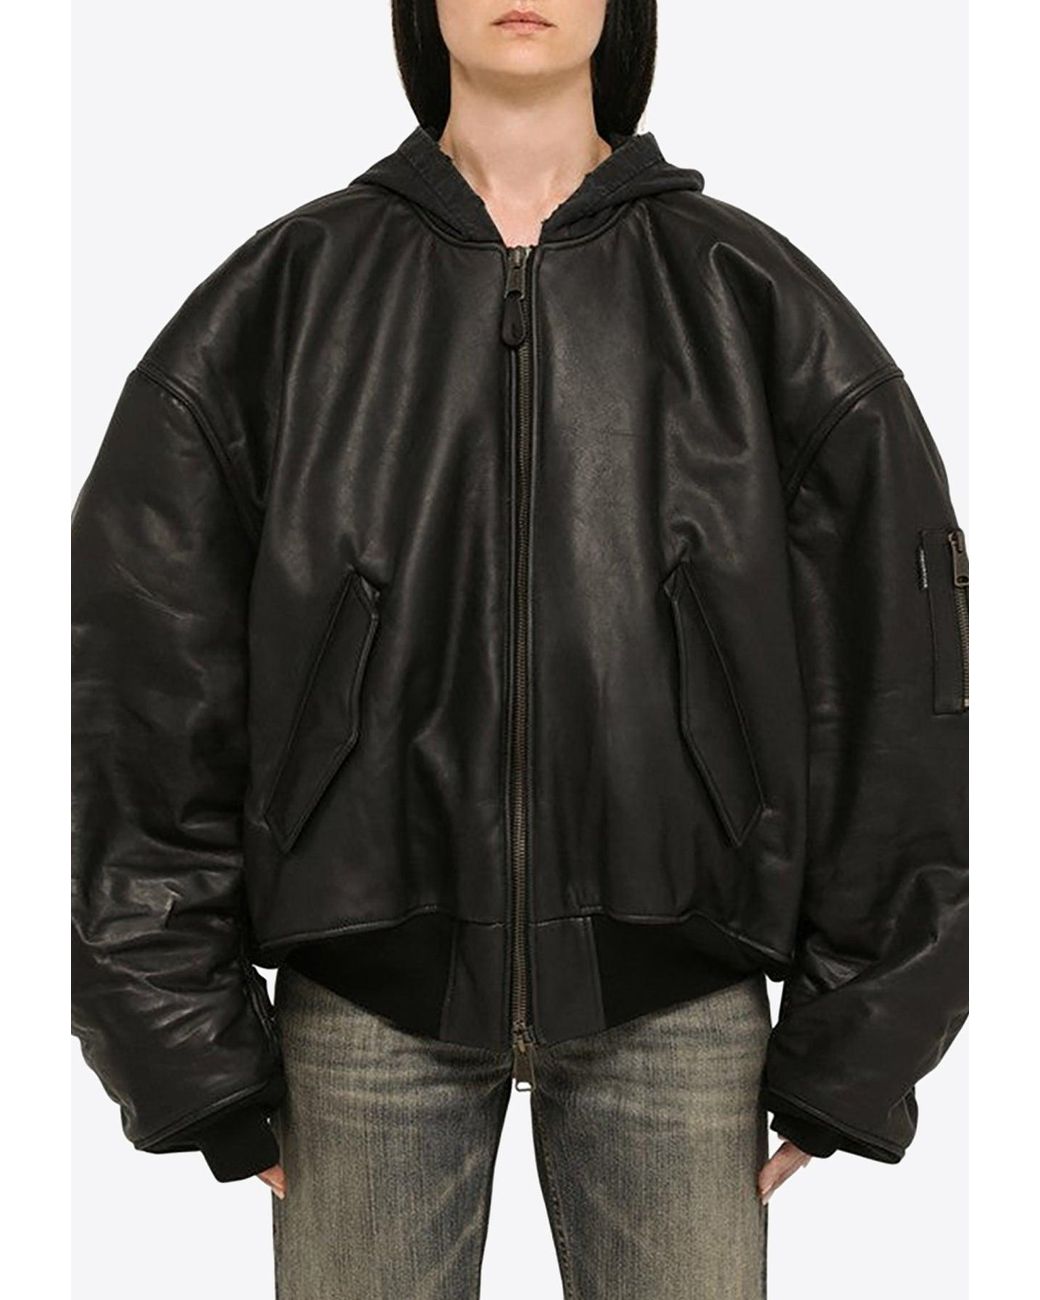 Balenciaga Oversized Leather Bomber Jacket in Black | Lyst